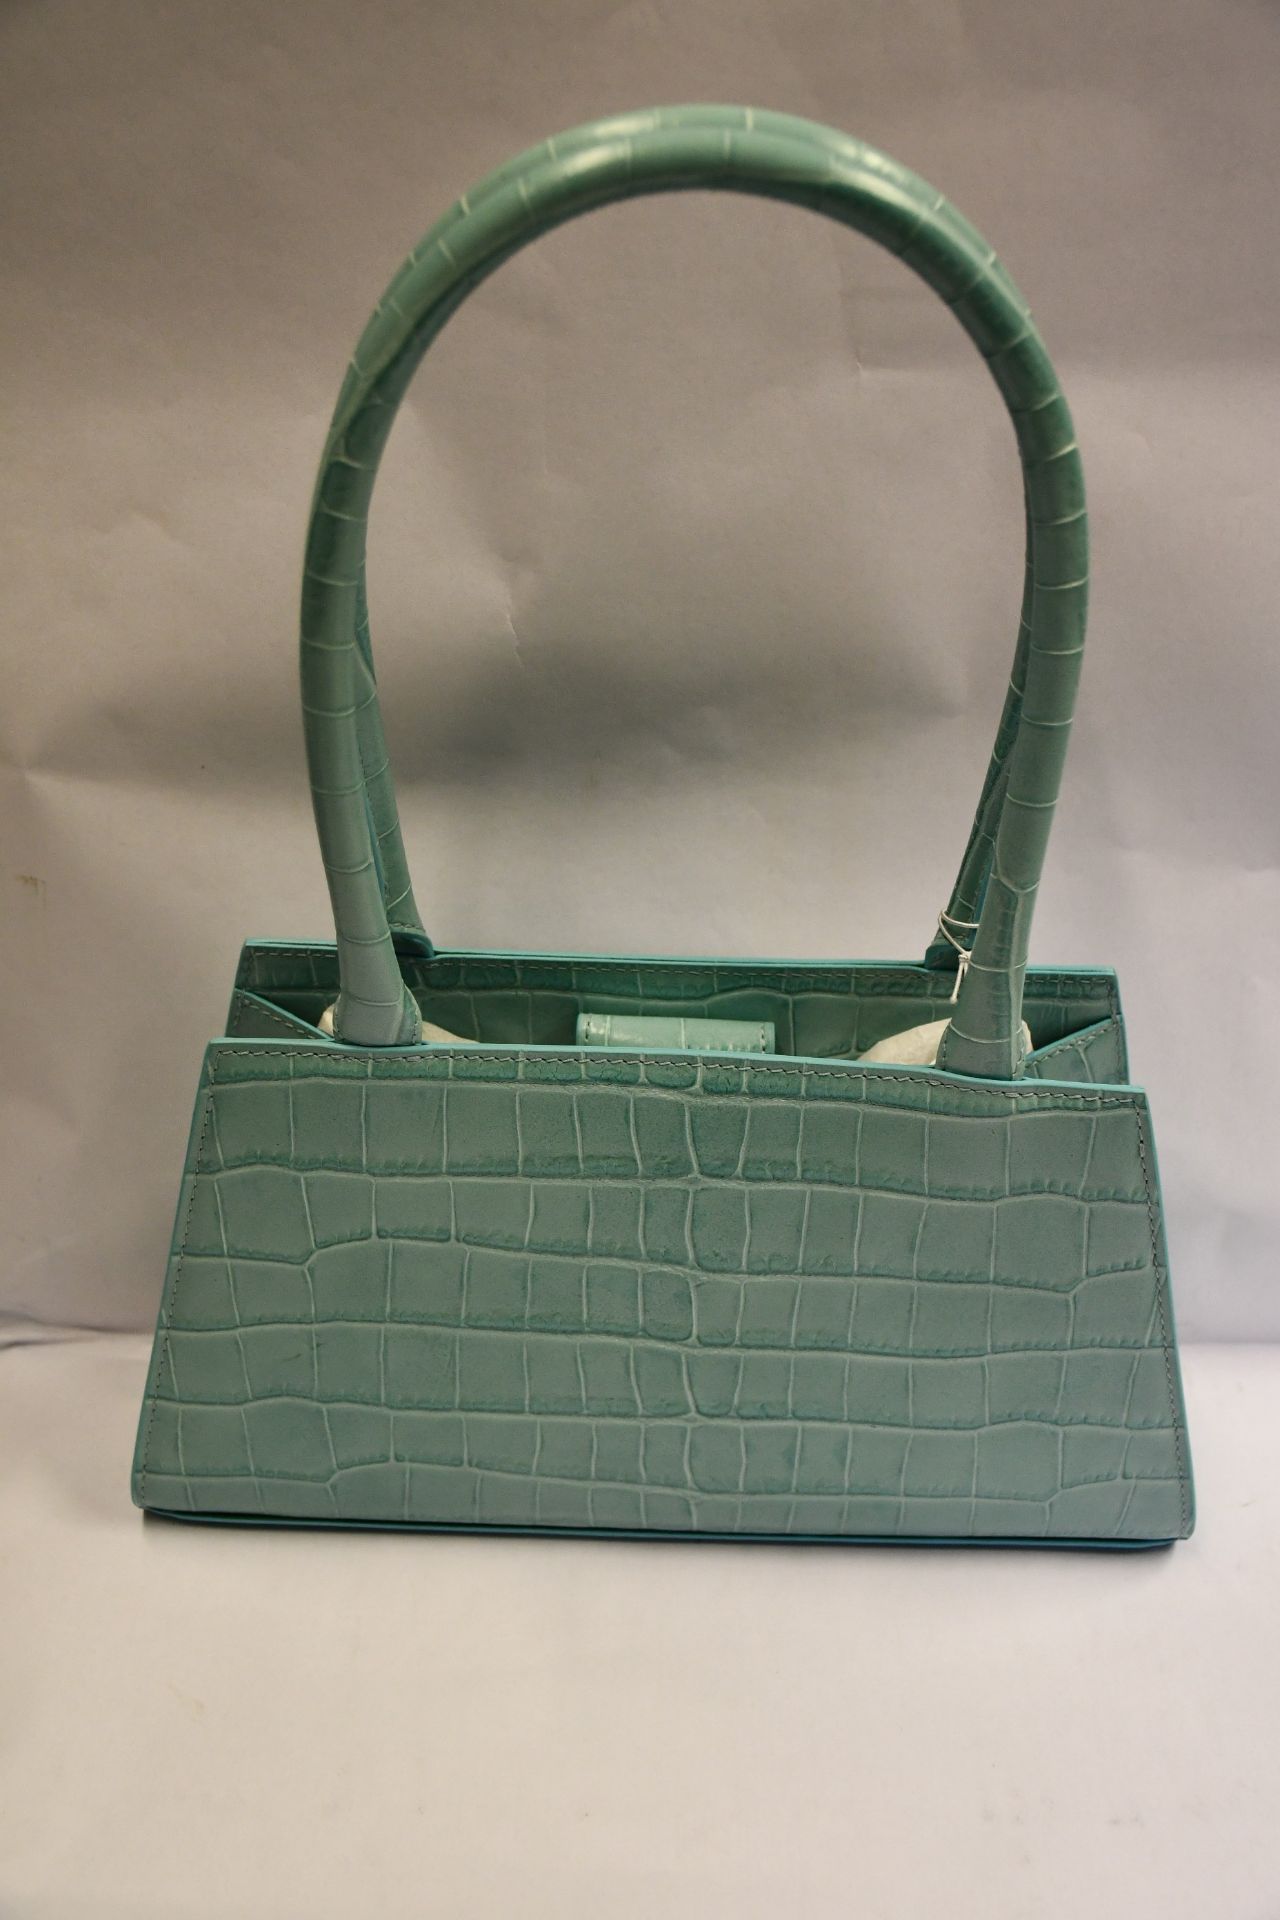 An as new Rixo Dora handbag with dust bag (RRP £310).